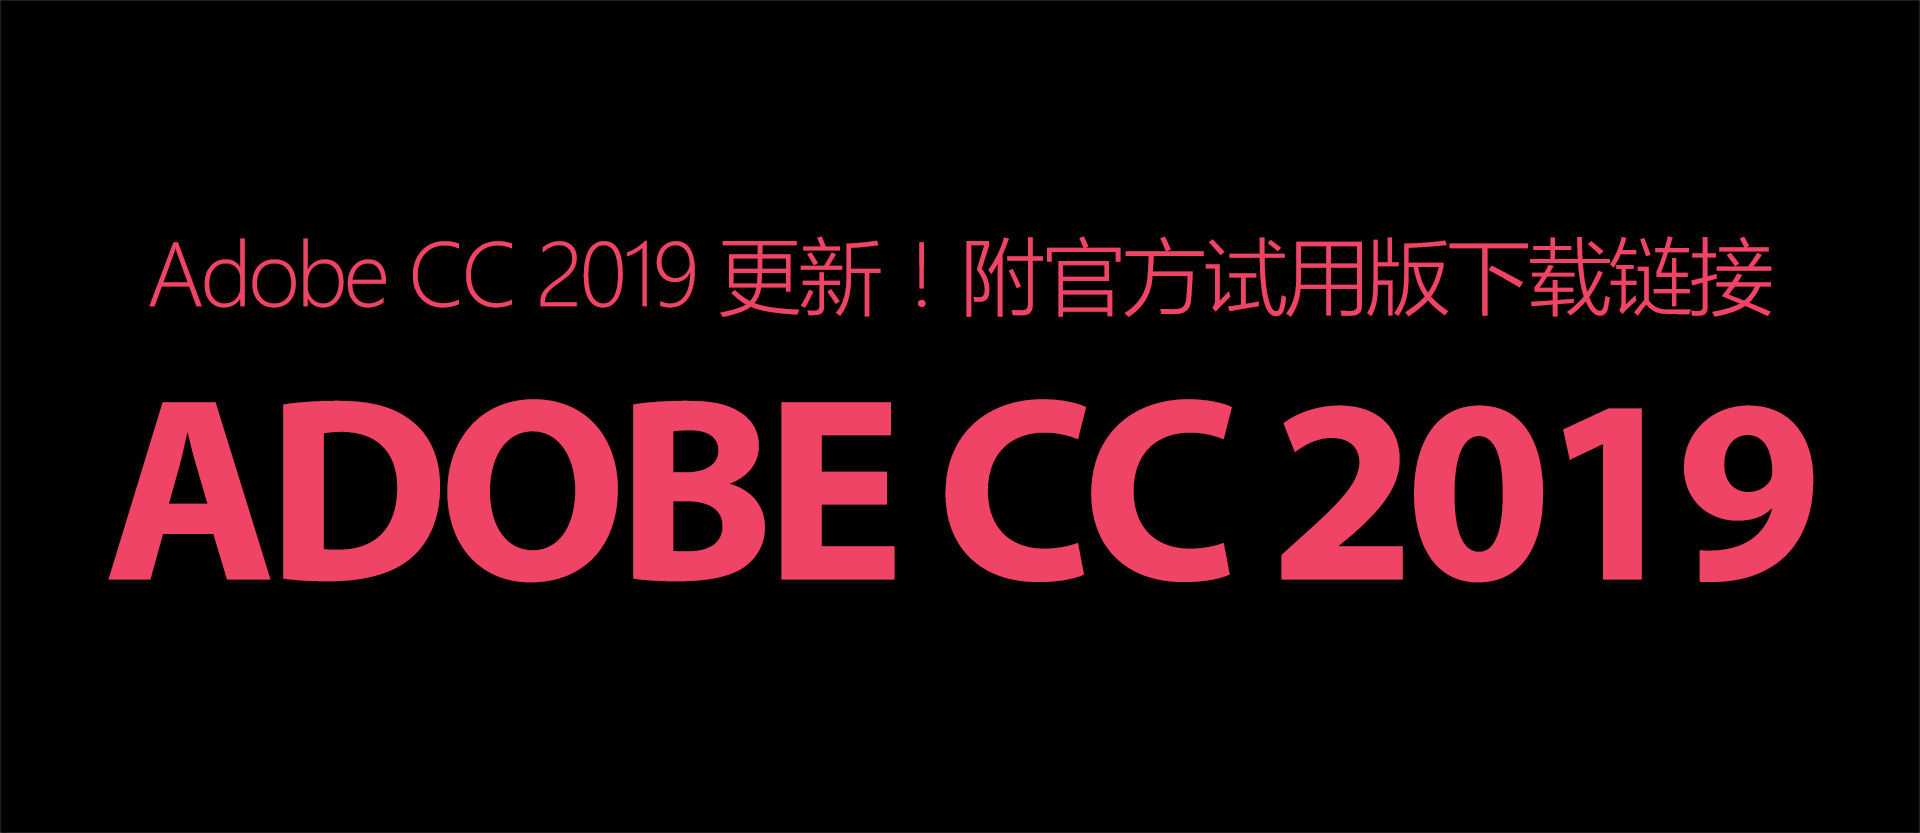 Adobe CC 2019 全家桶 重大更新！附官方试用版下载链接 - 第1张